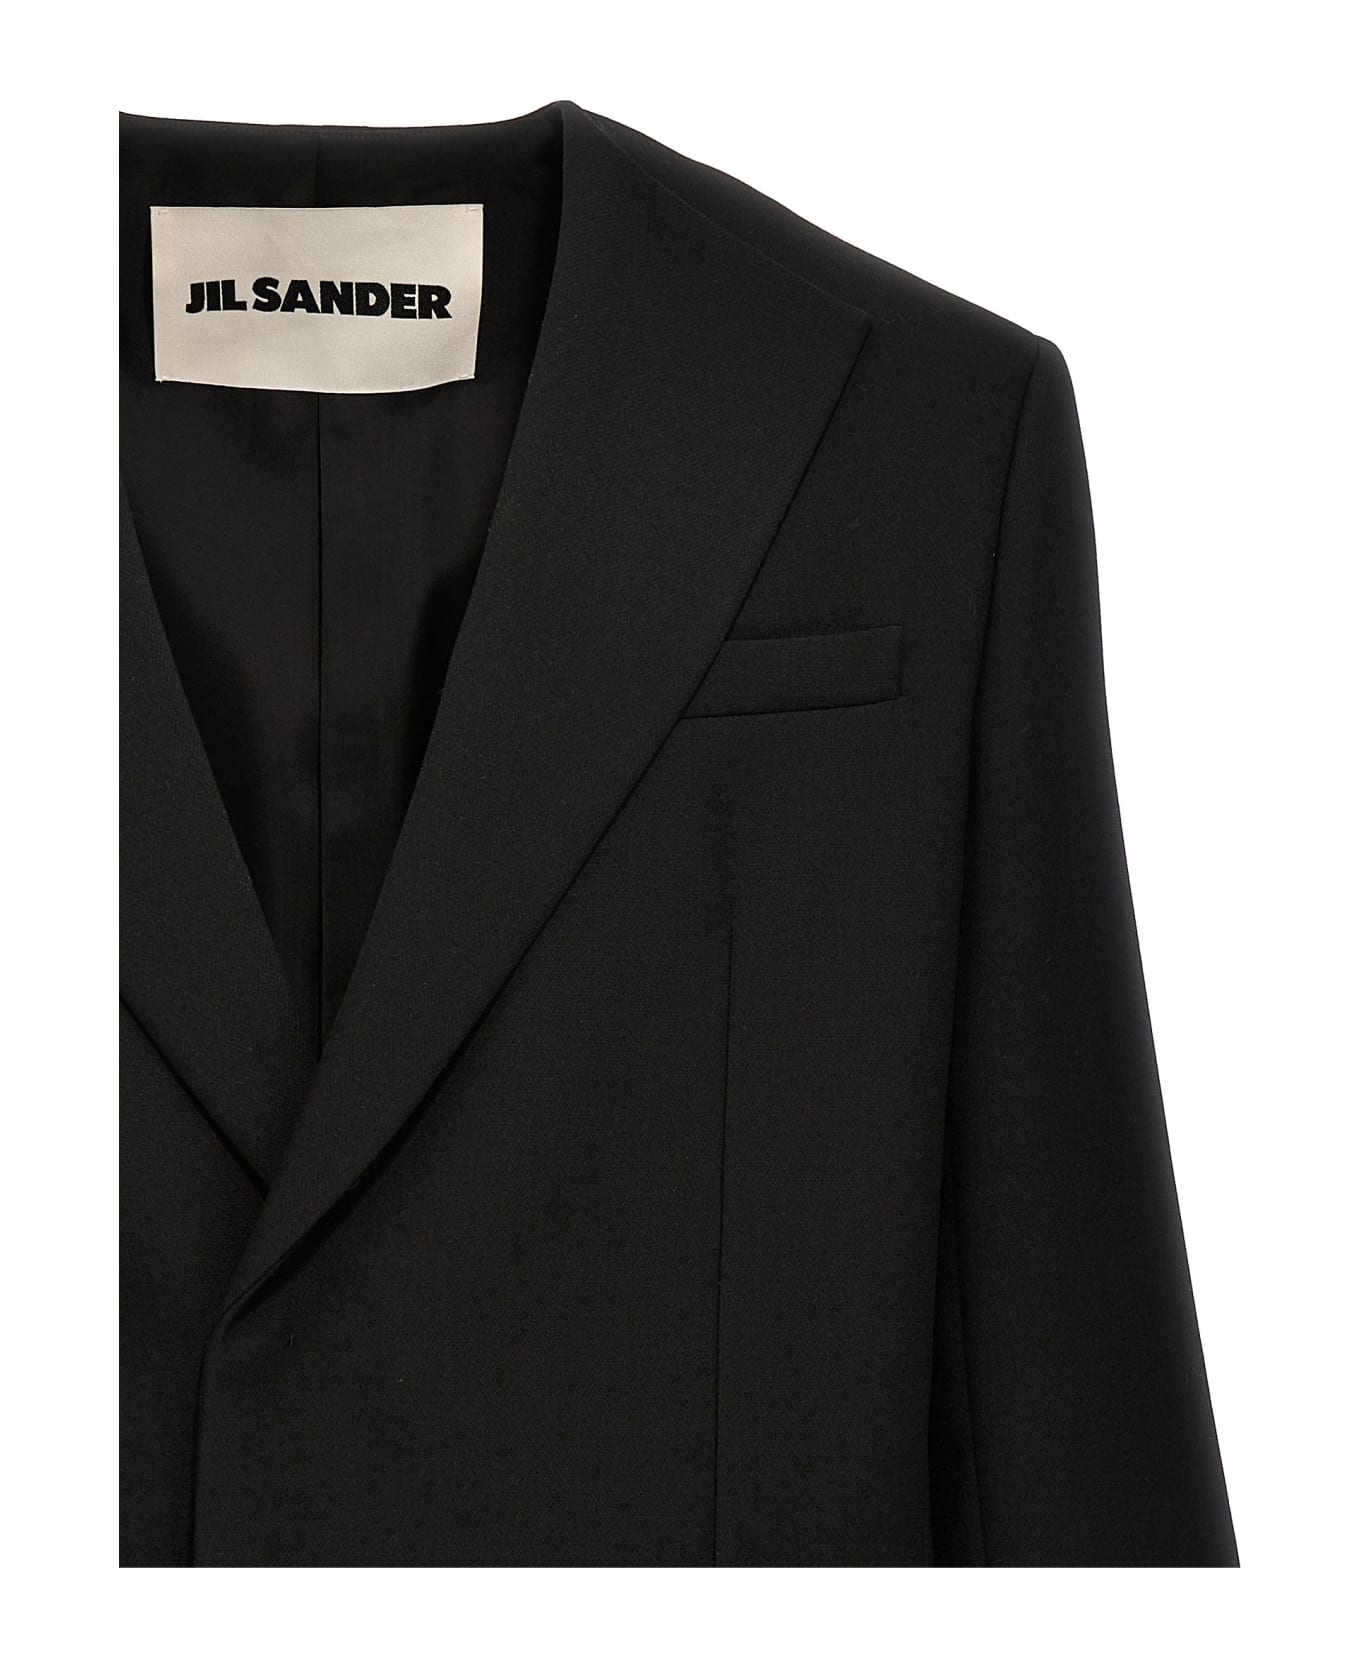 Jil Sander '30' Blazer - Black   ブレザー